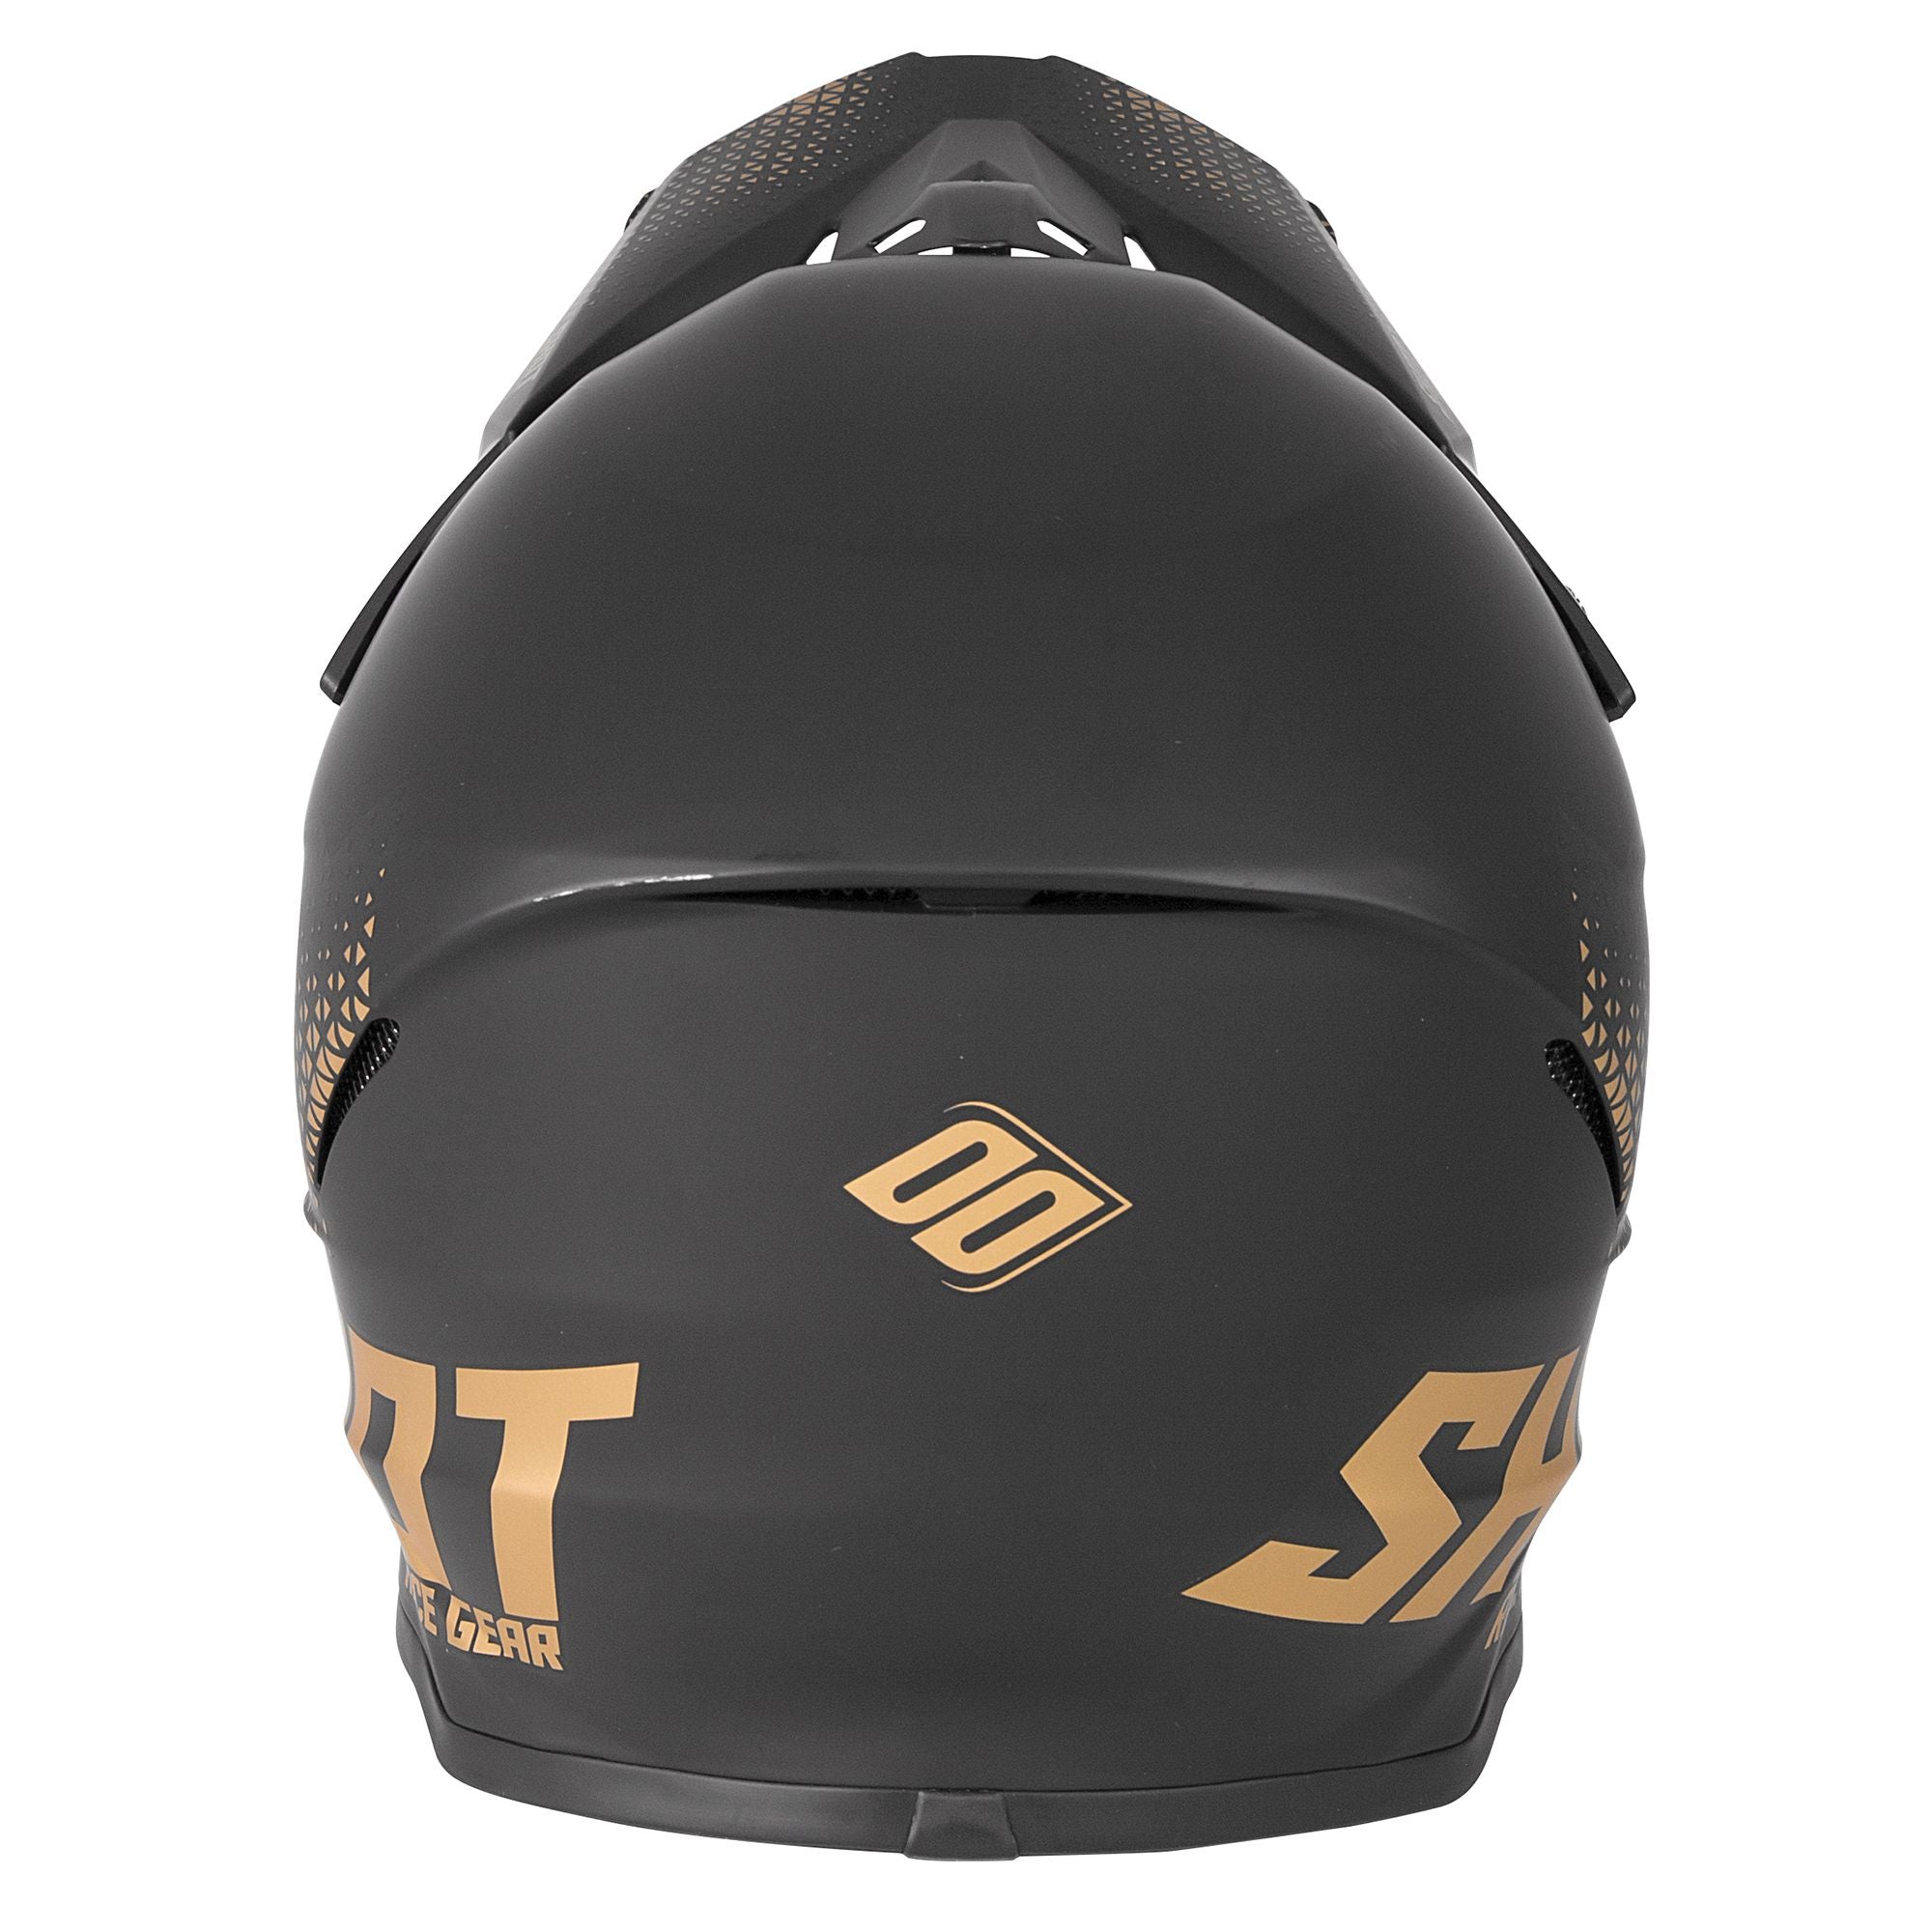 Load image into Gallery viewer, Shot Furious MX Helmet Adult - Raw Black Gold Matt
